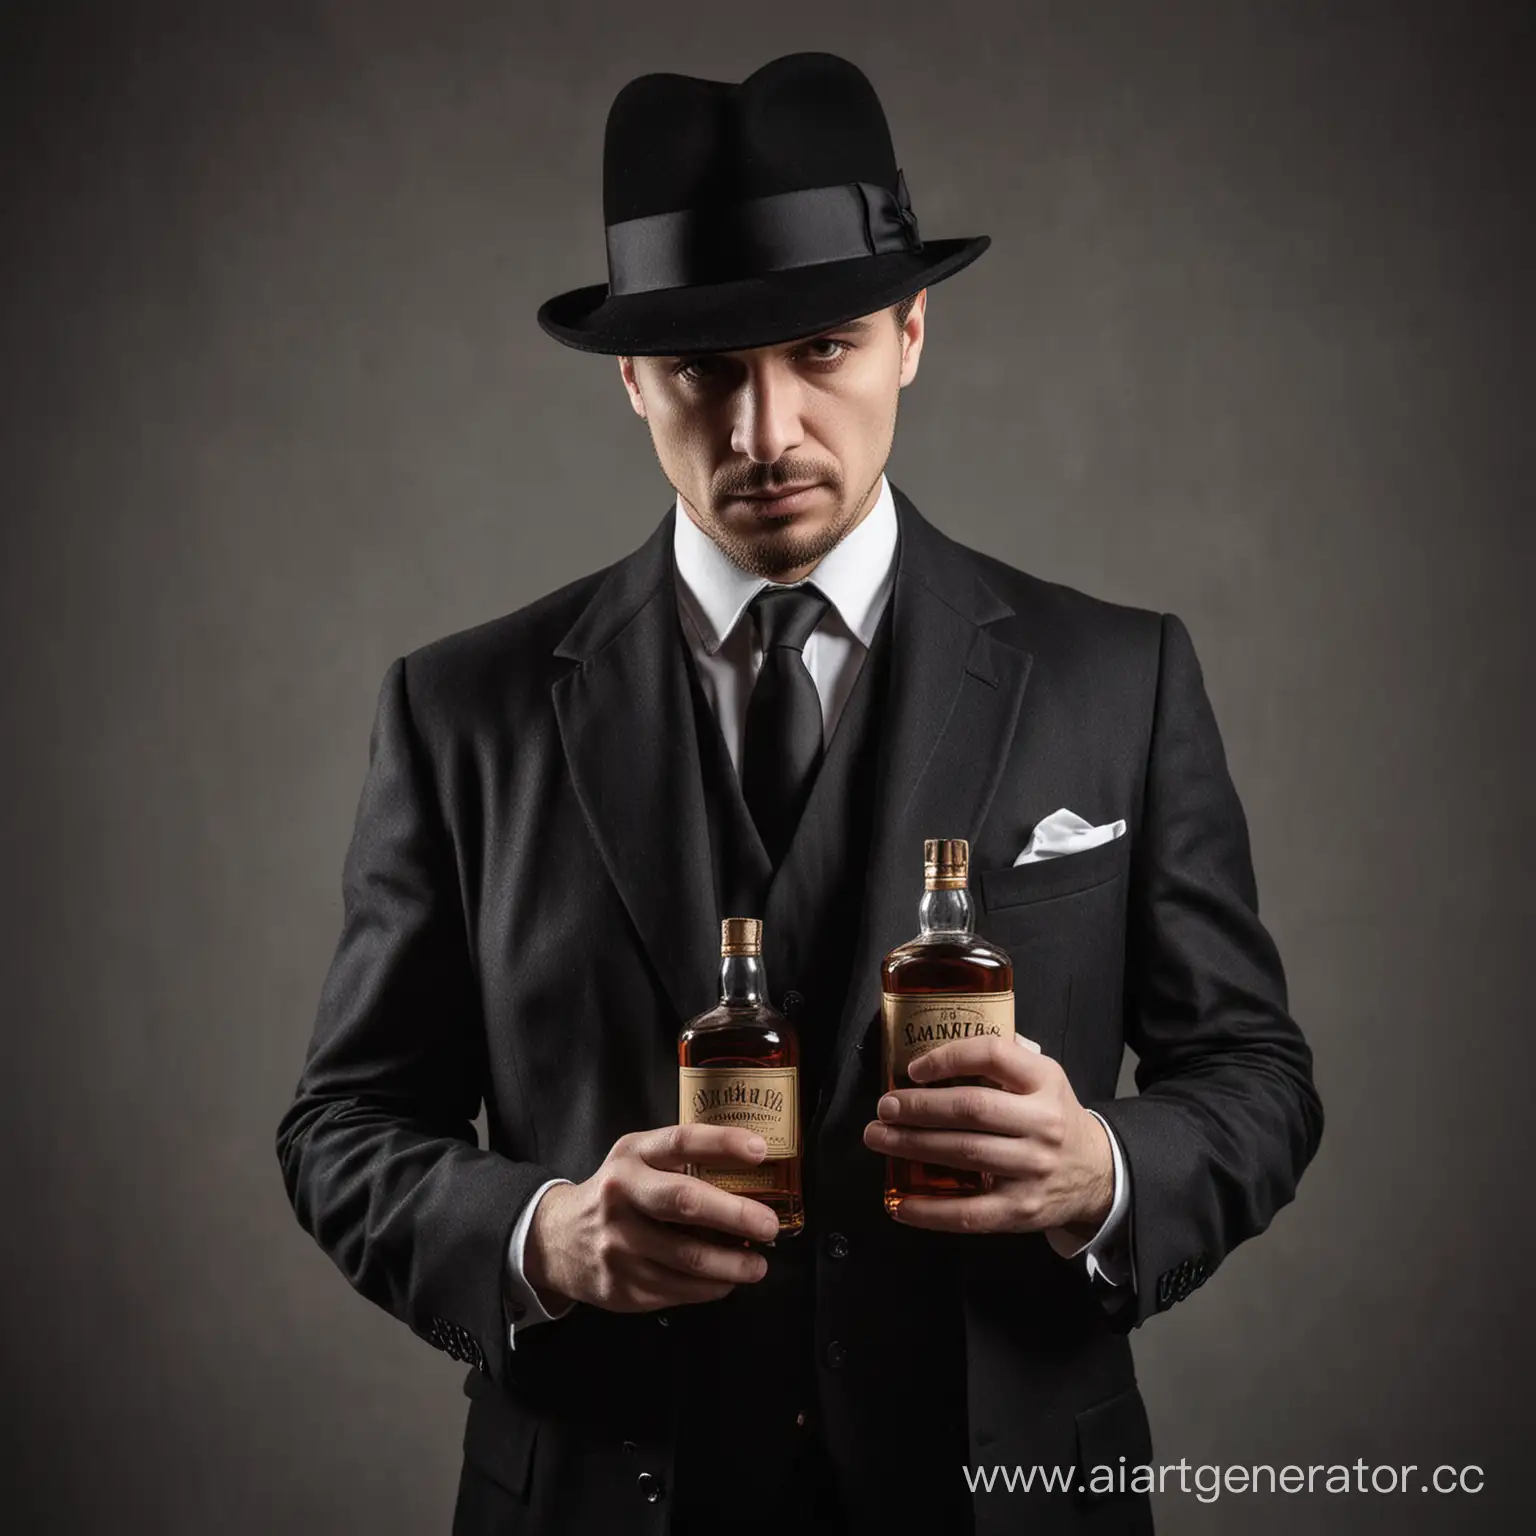 Mafia-Boss-with-Whiskey-Bottle-in-Hand